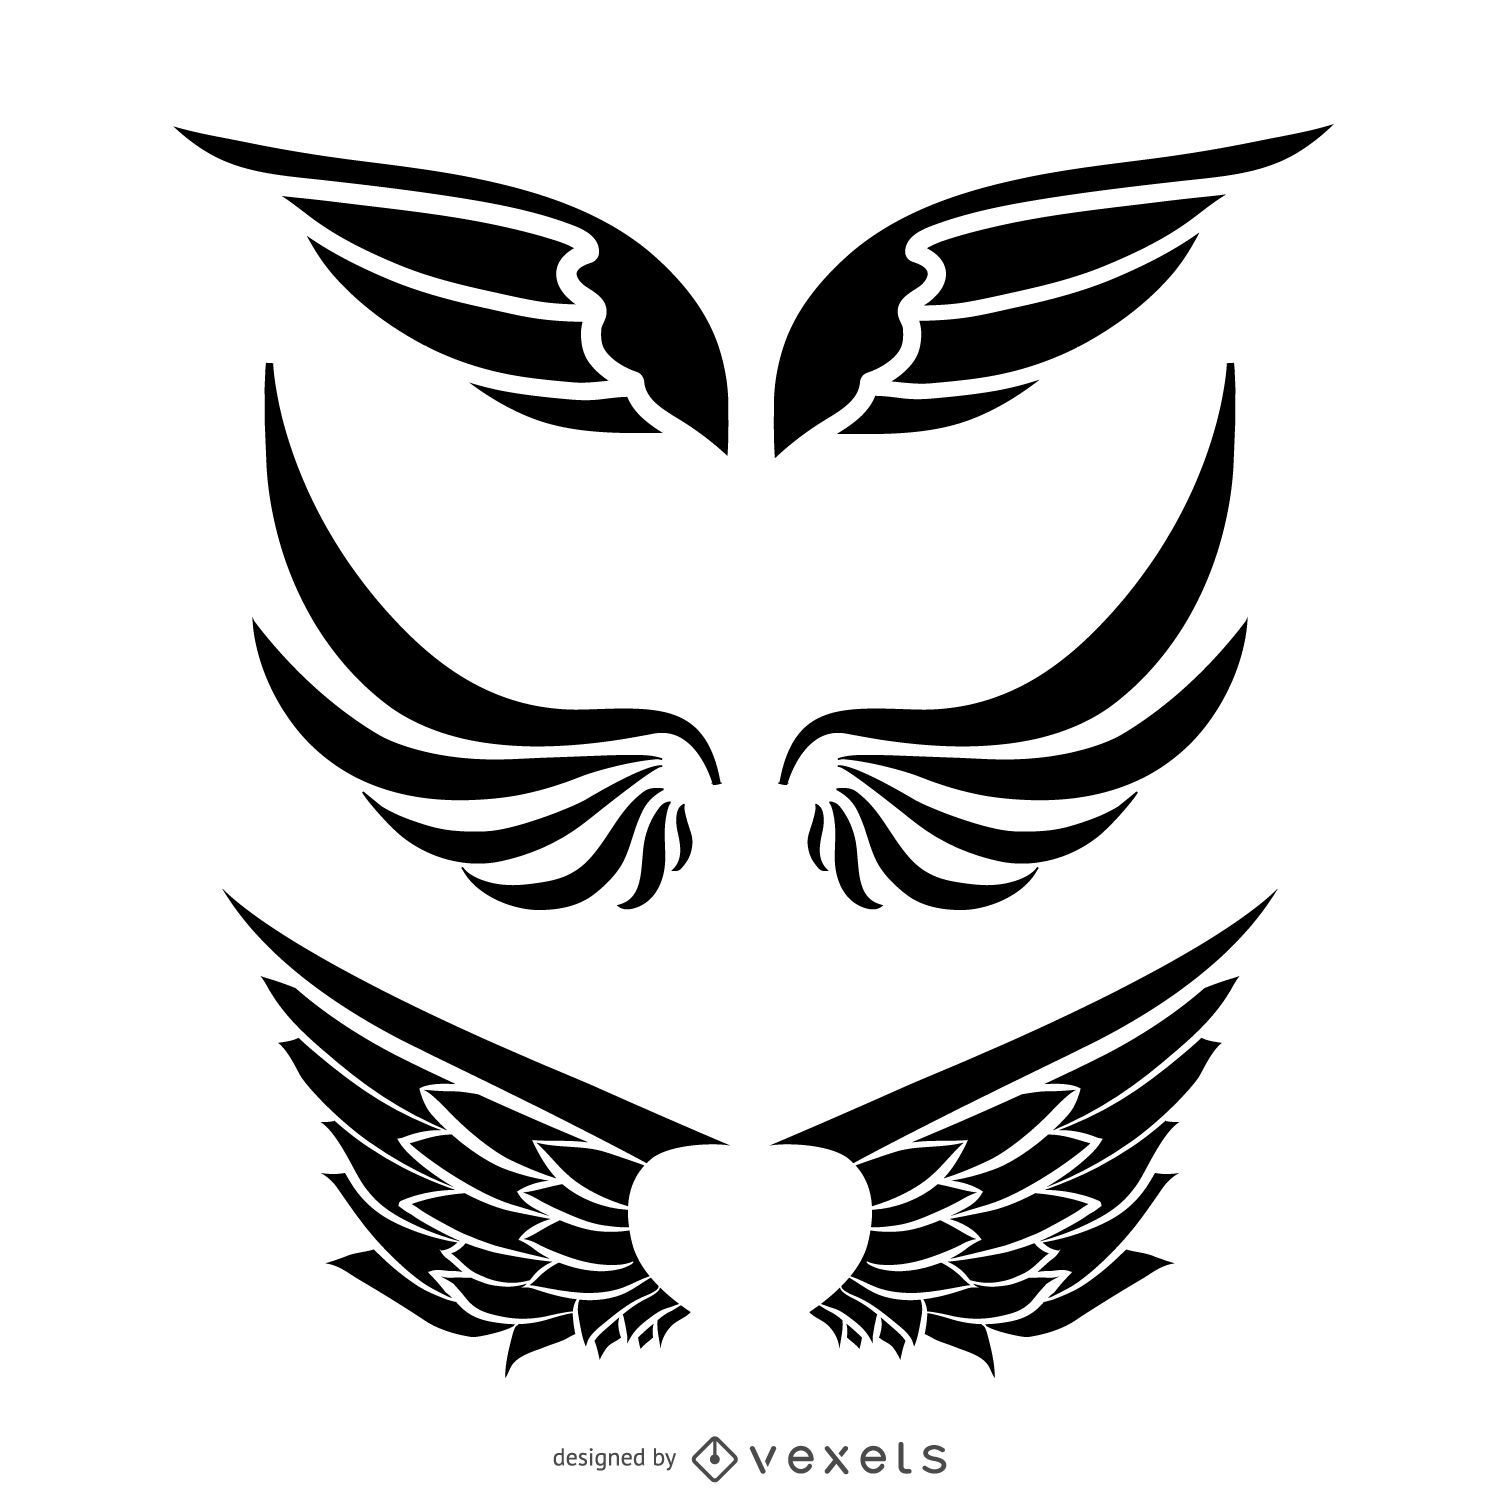 Isolated wing illustration set